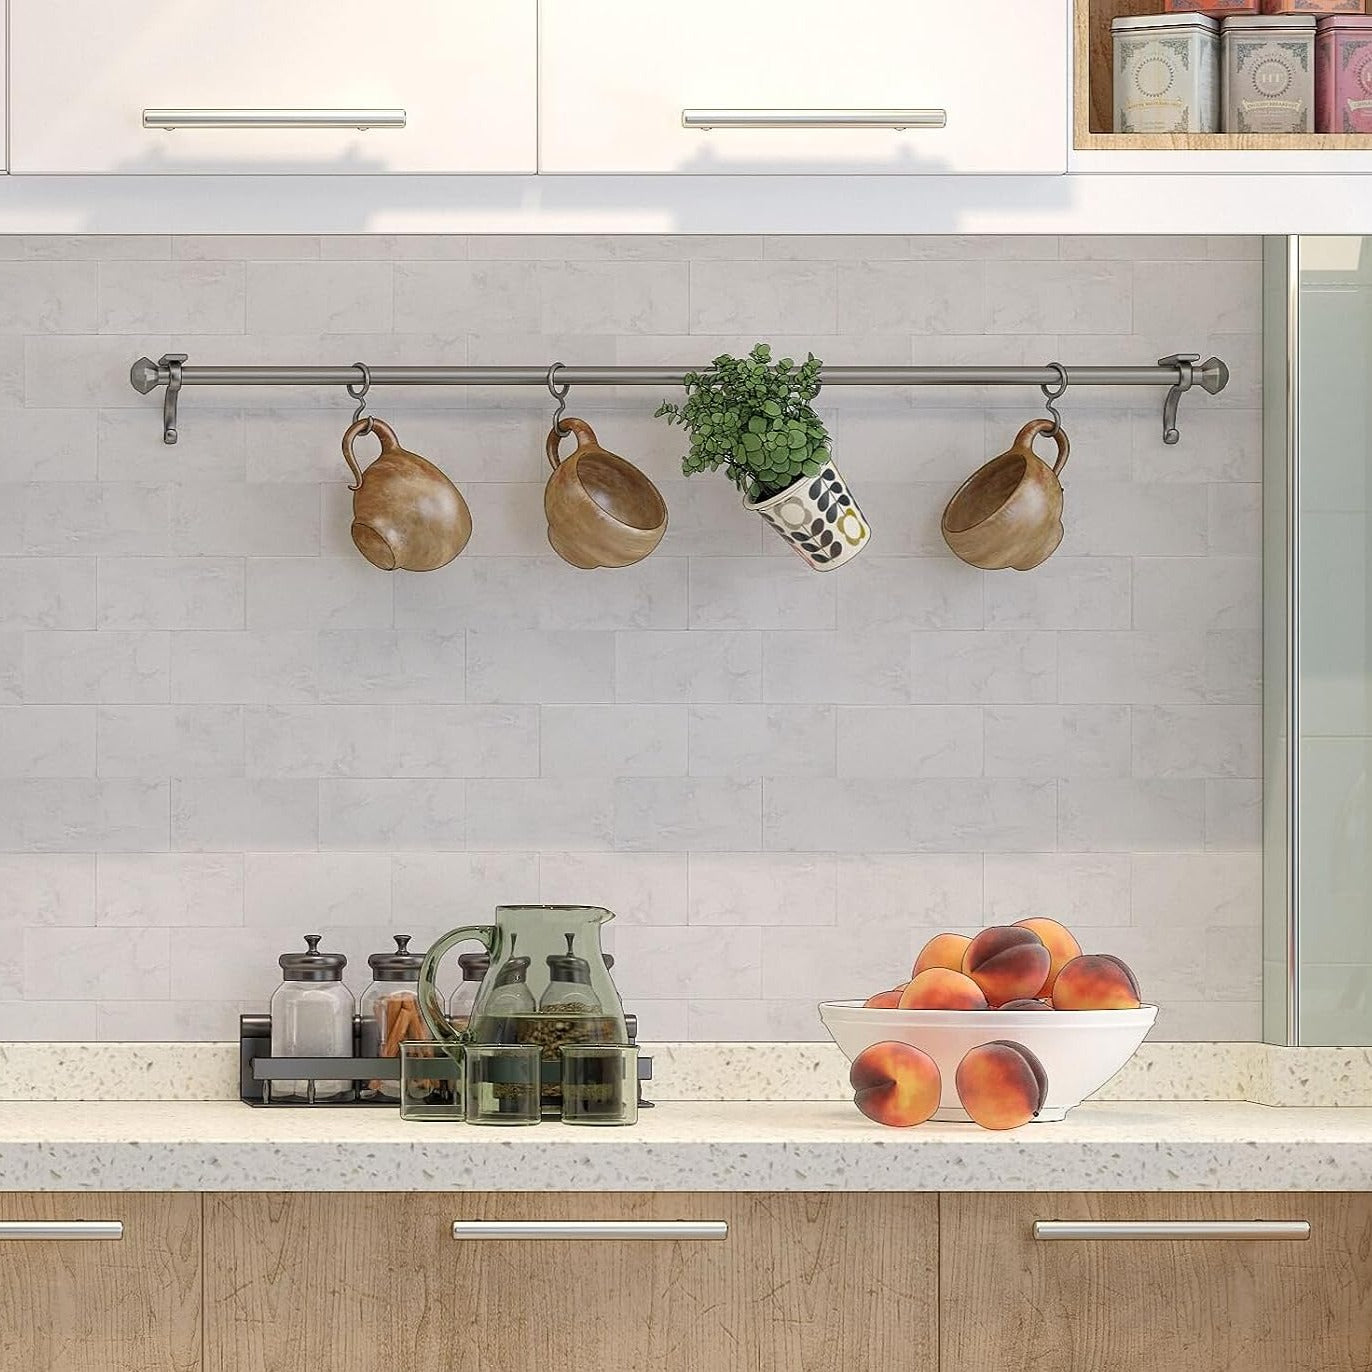 3" X 6"  PVC backsplash tile for kitchen in Kara White Stone lifestyle image